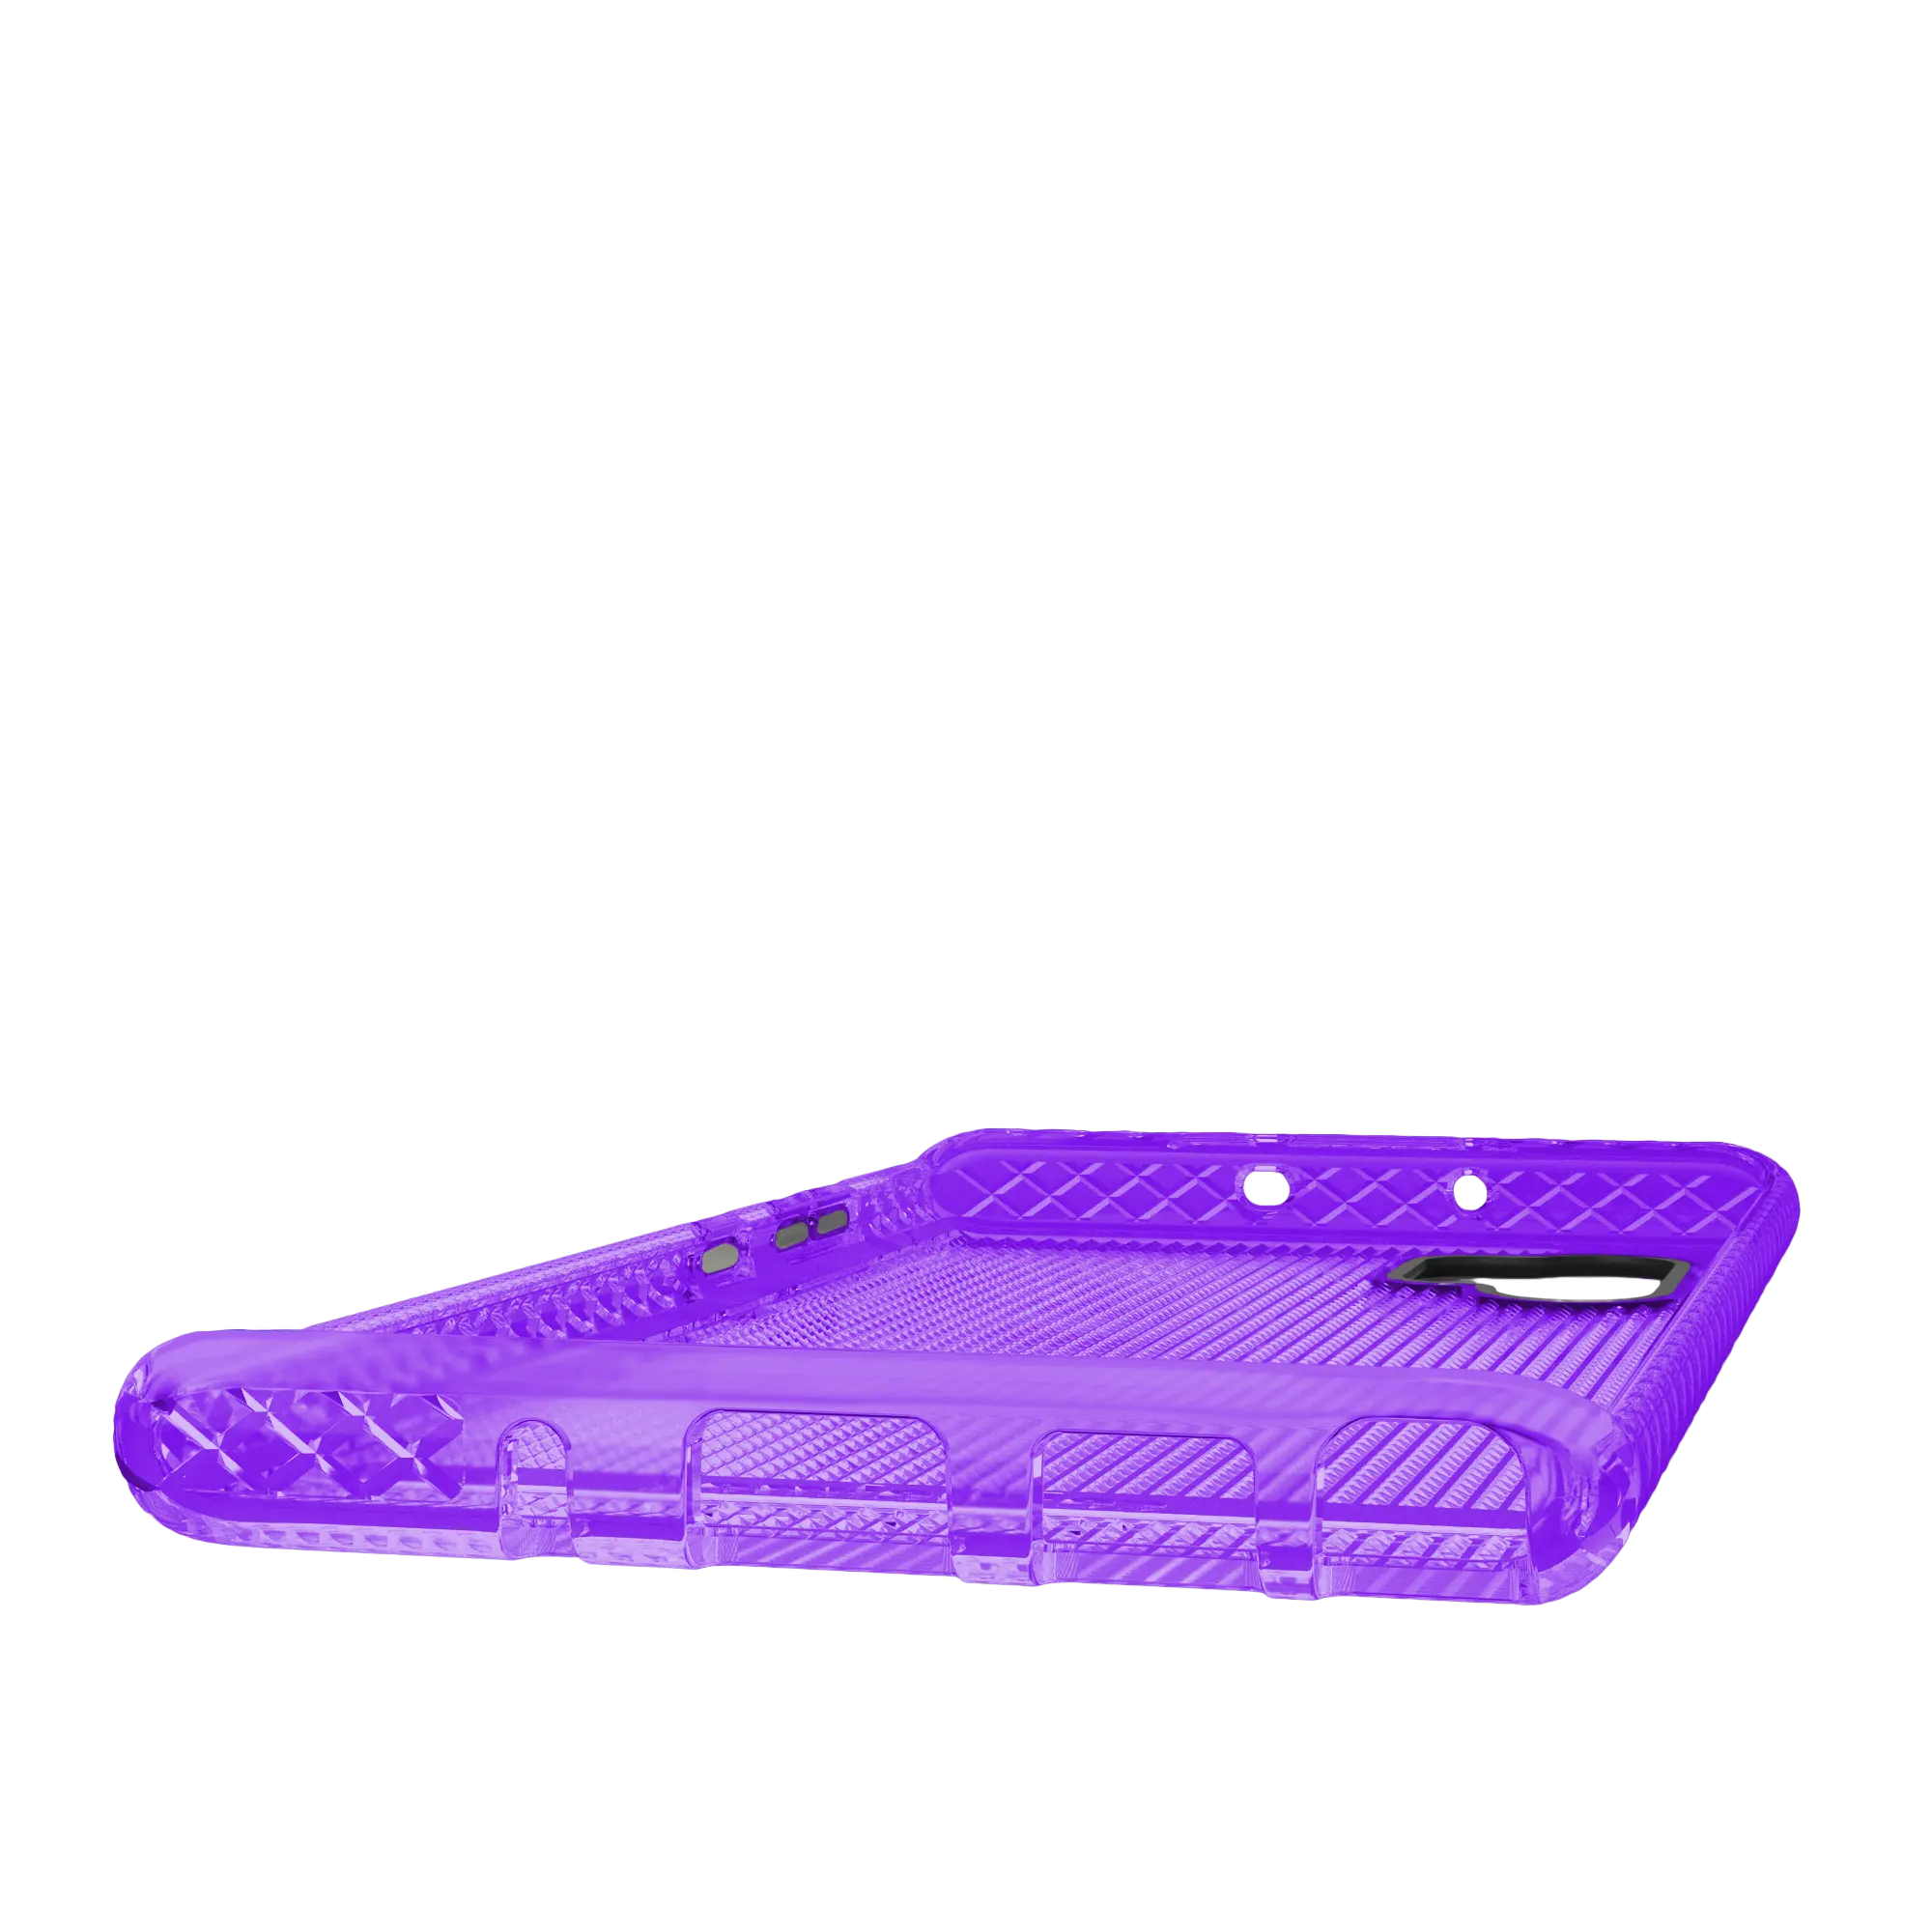 Altitude X Series for Samsung Galaxy Note 10 Plus  - Purple - Case -  - cellhelmet